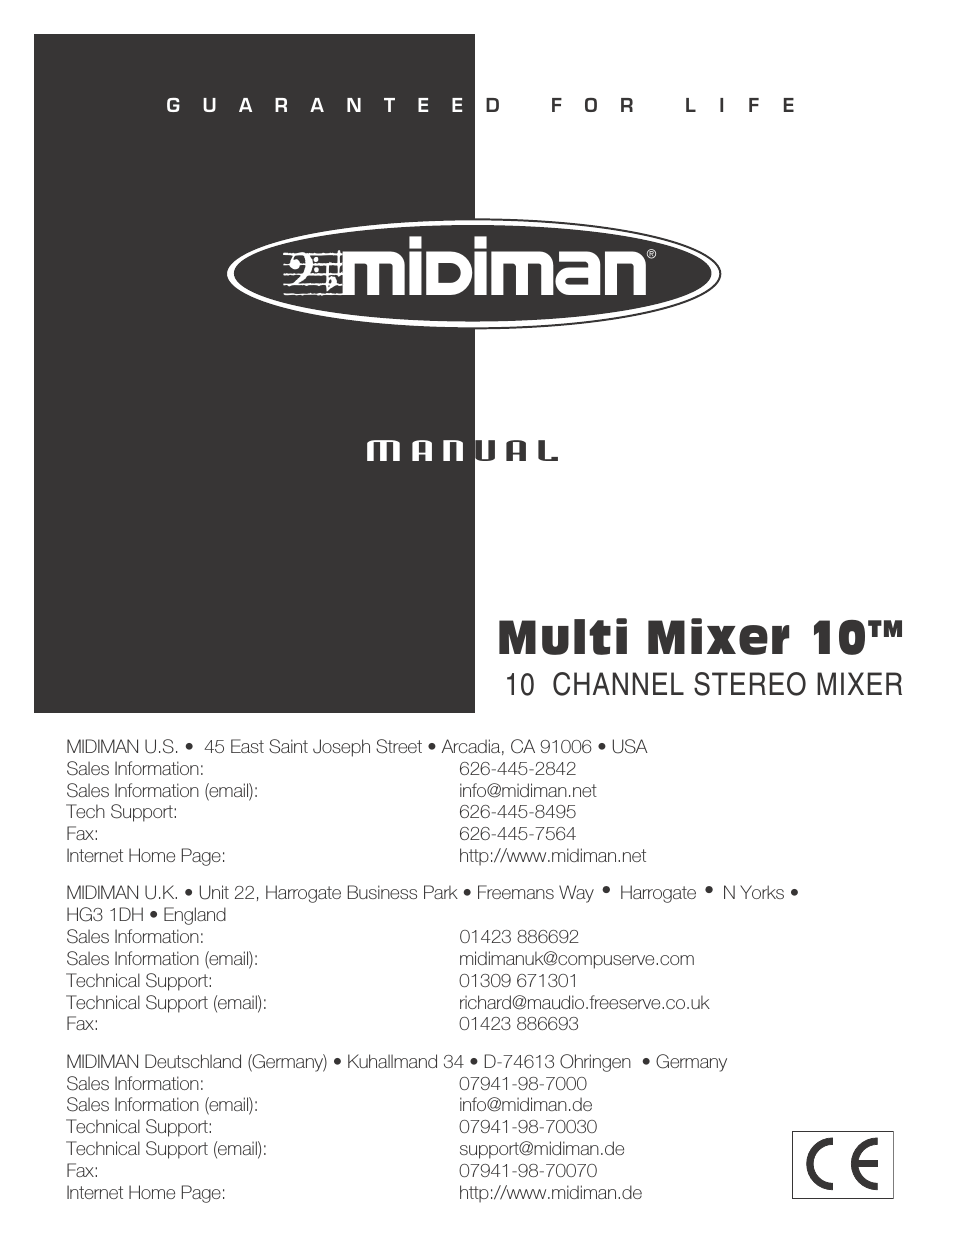 Multimixer 10